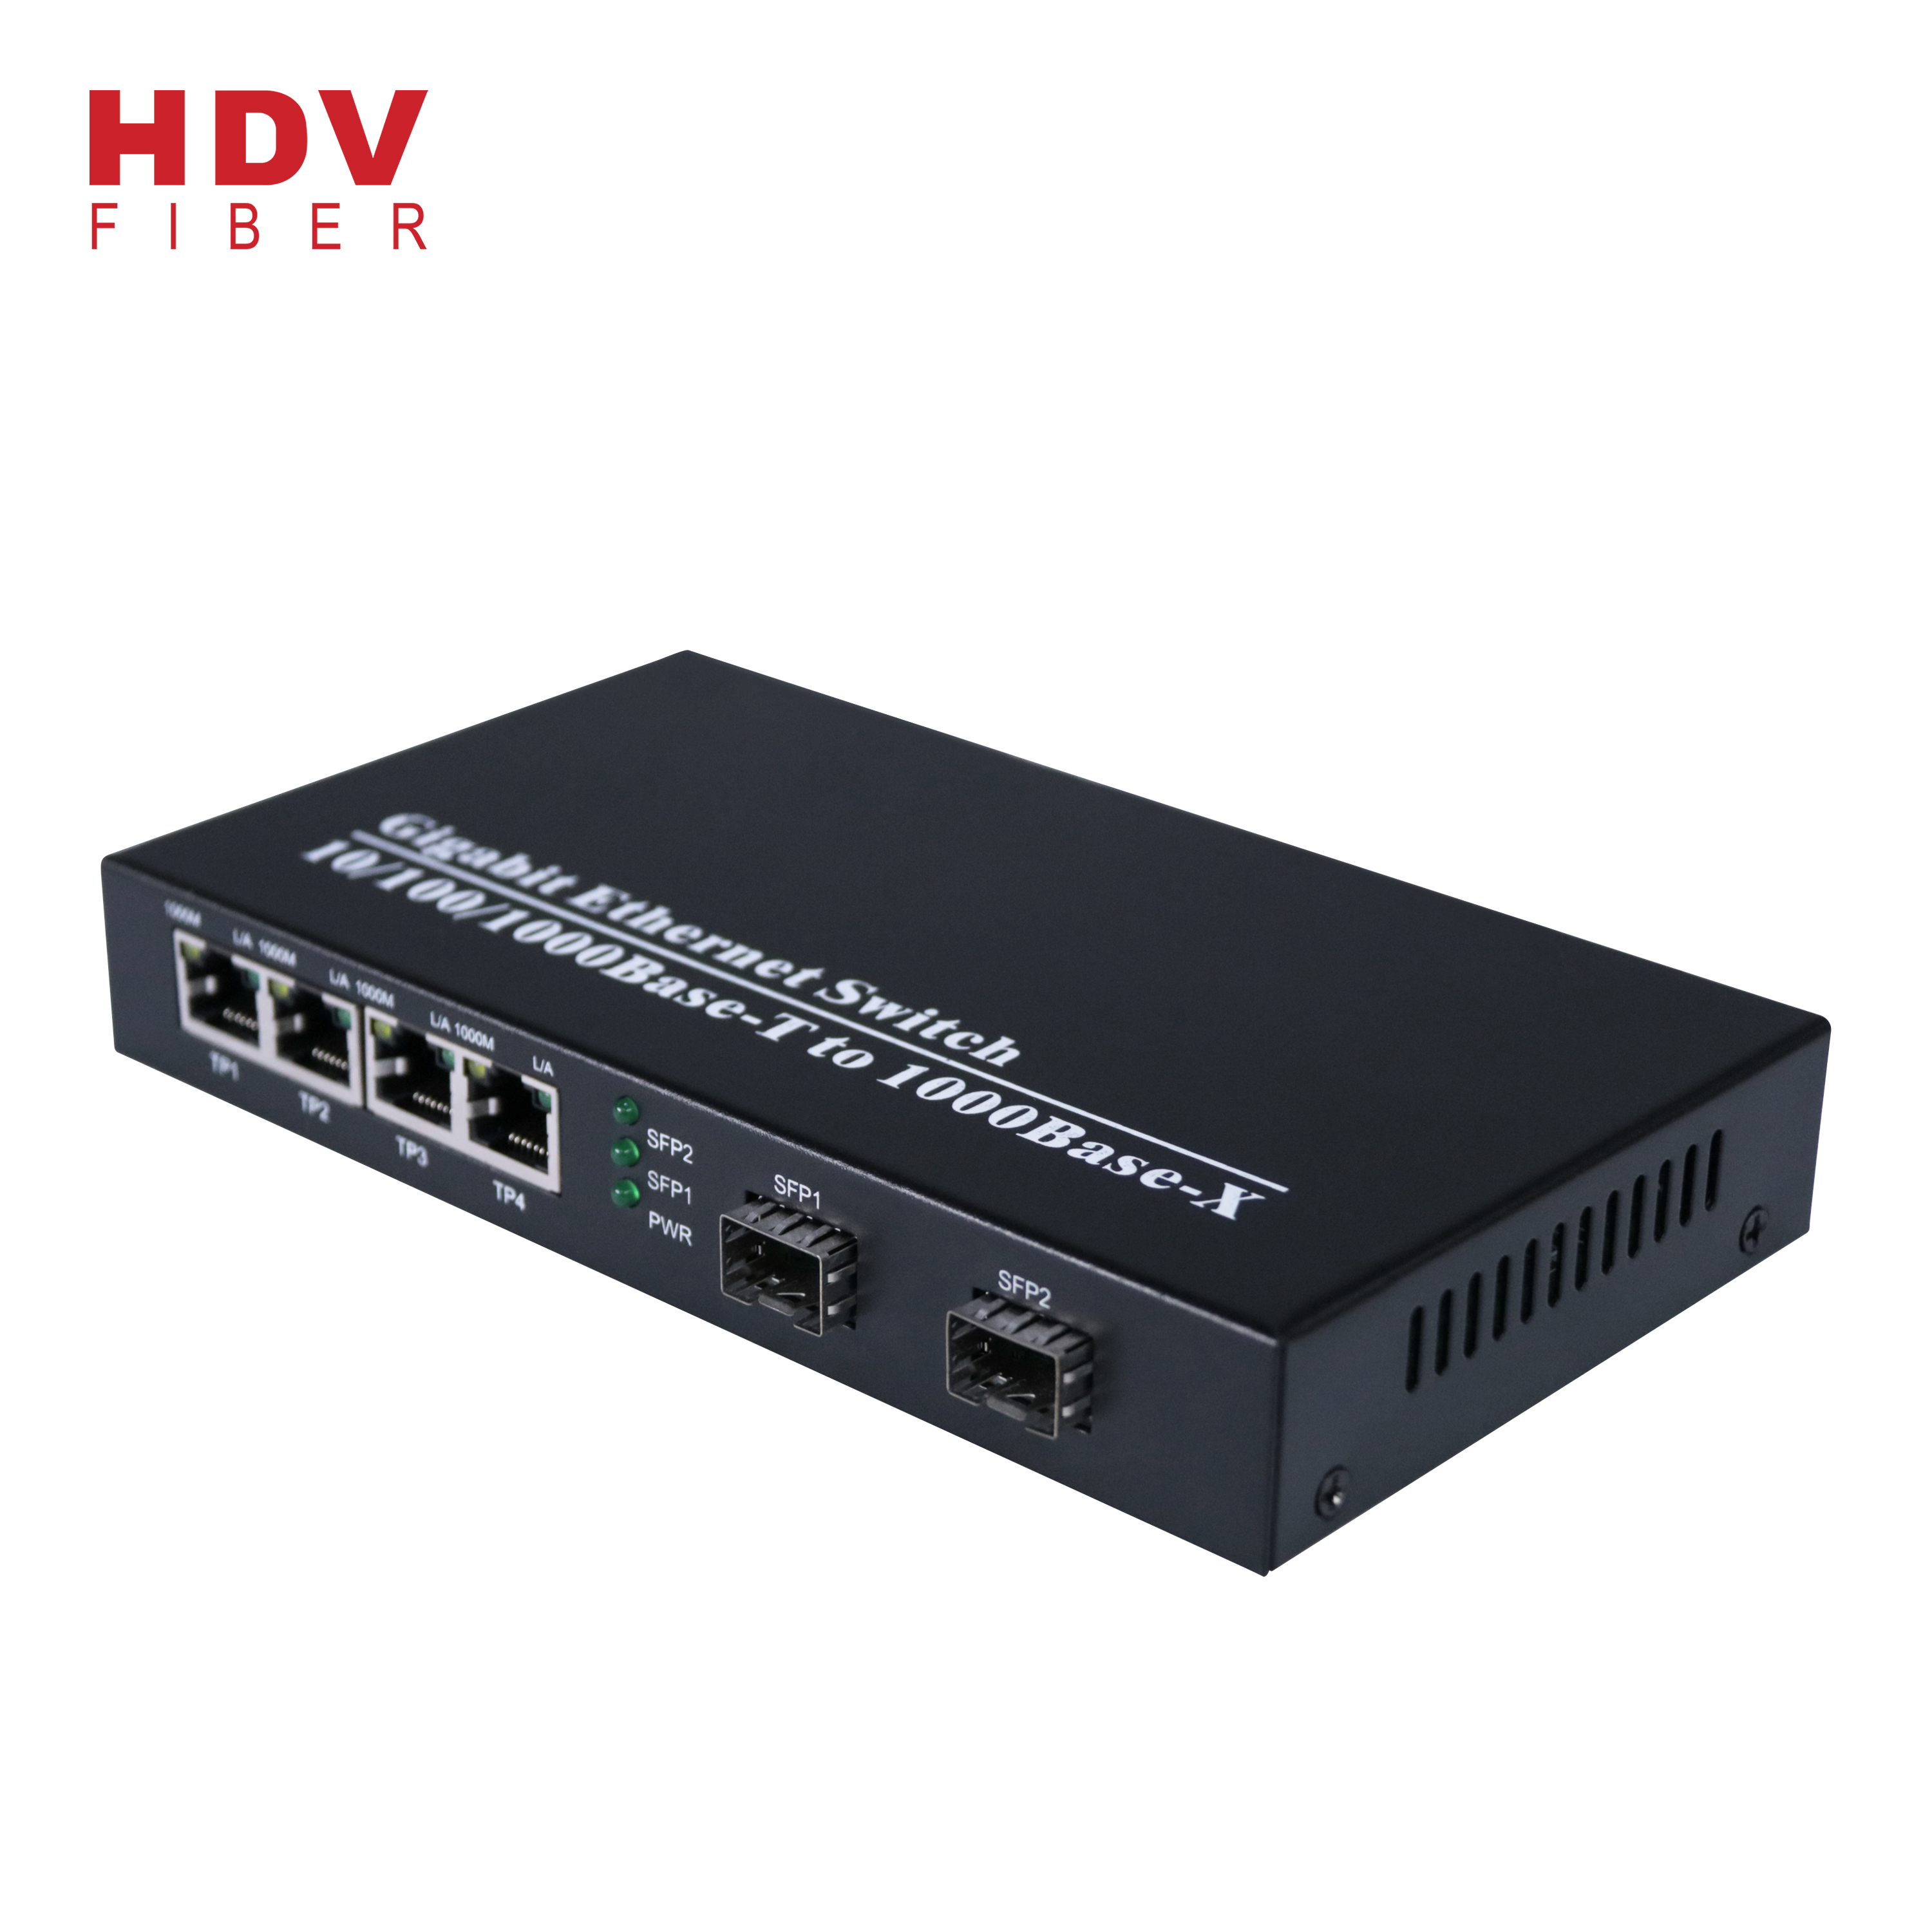 Free sample for Fiber Sfp Module - 4 Port Gigabit Ethernet Switch and 2 SFP Ports 1000M fiber optic transceiver switch – HDV